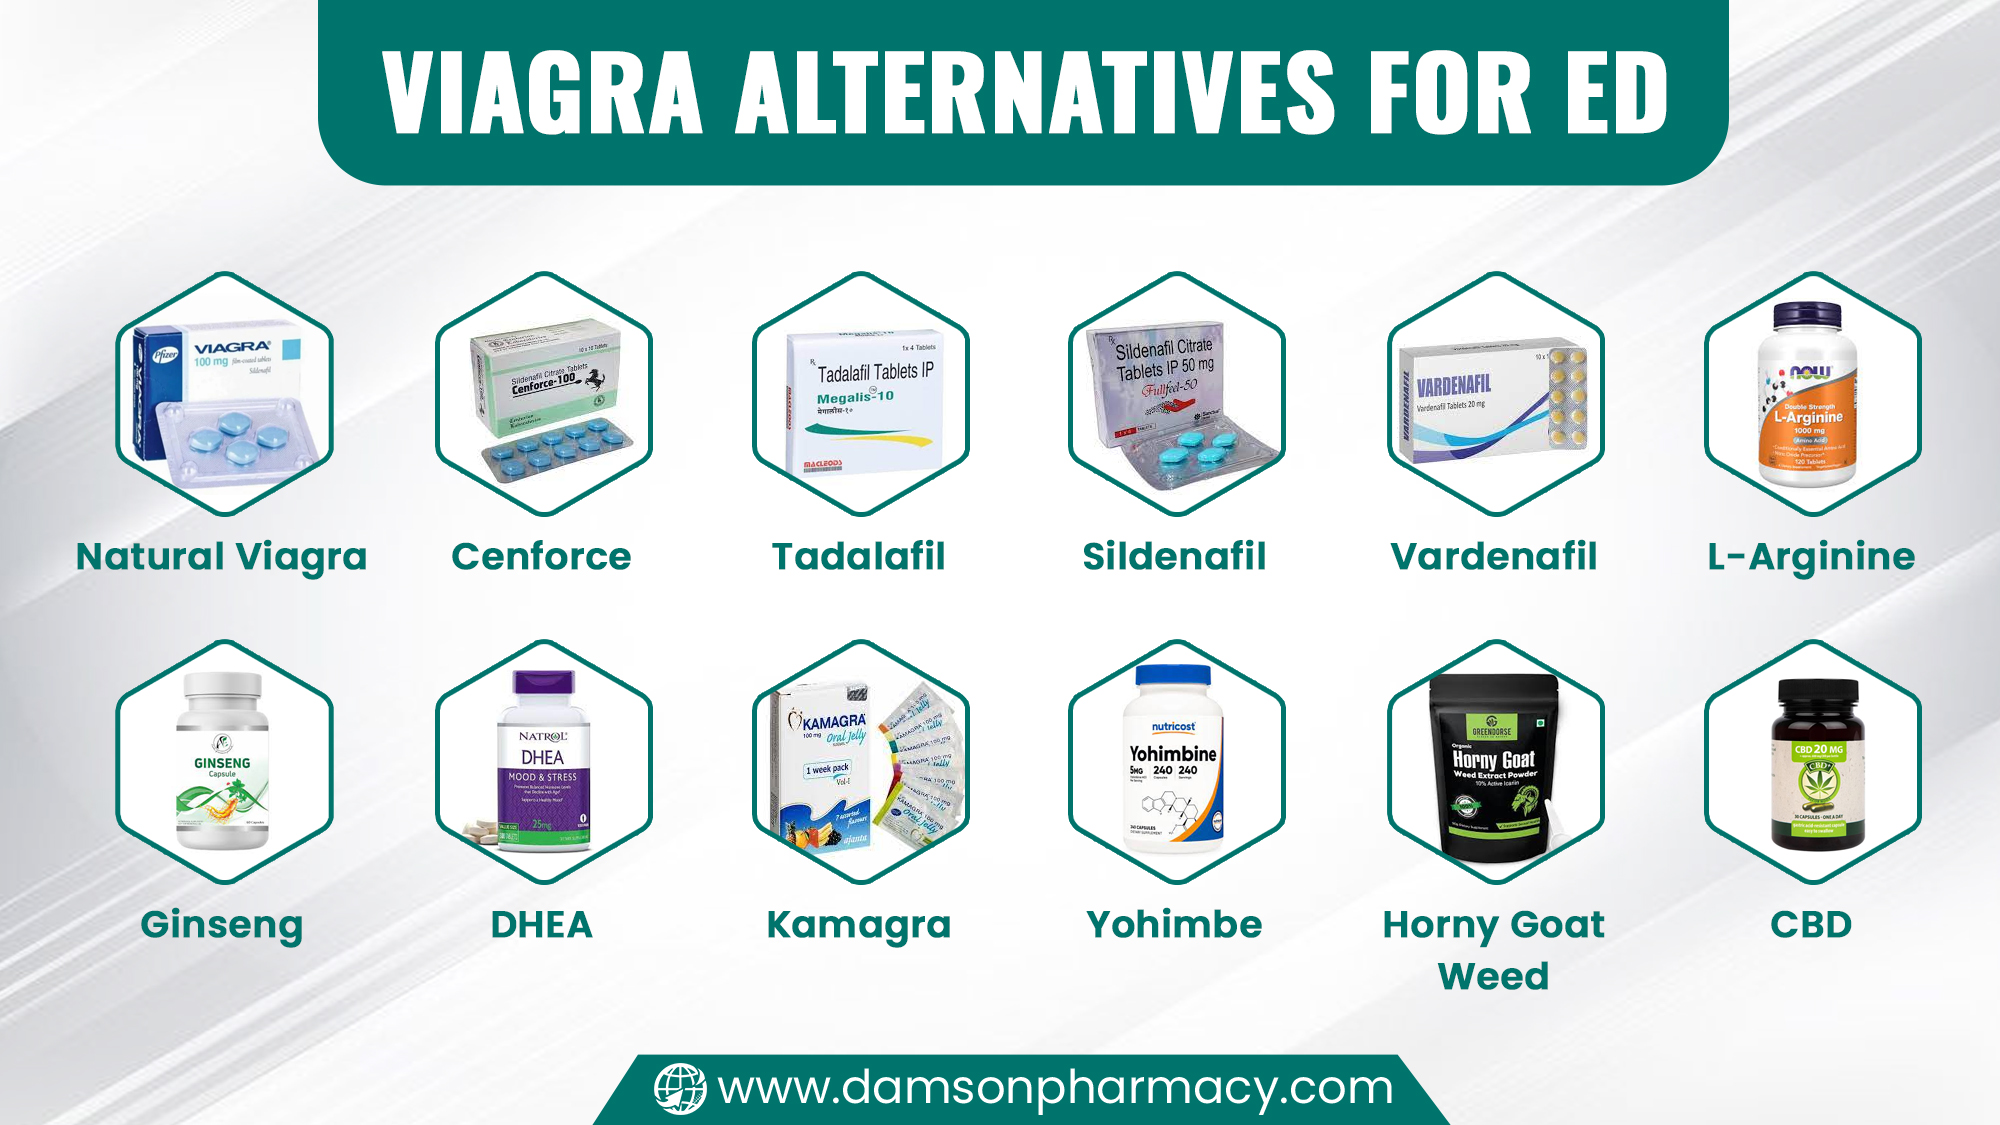 Viagra Alternatives for ED